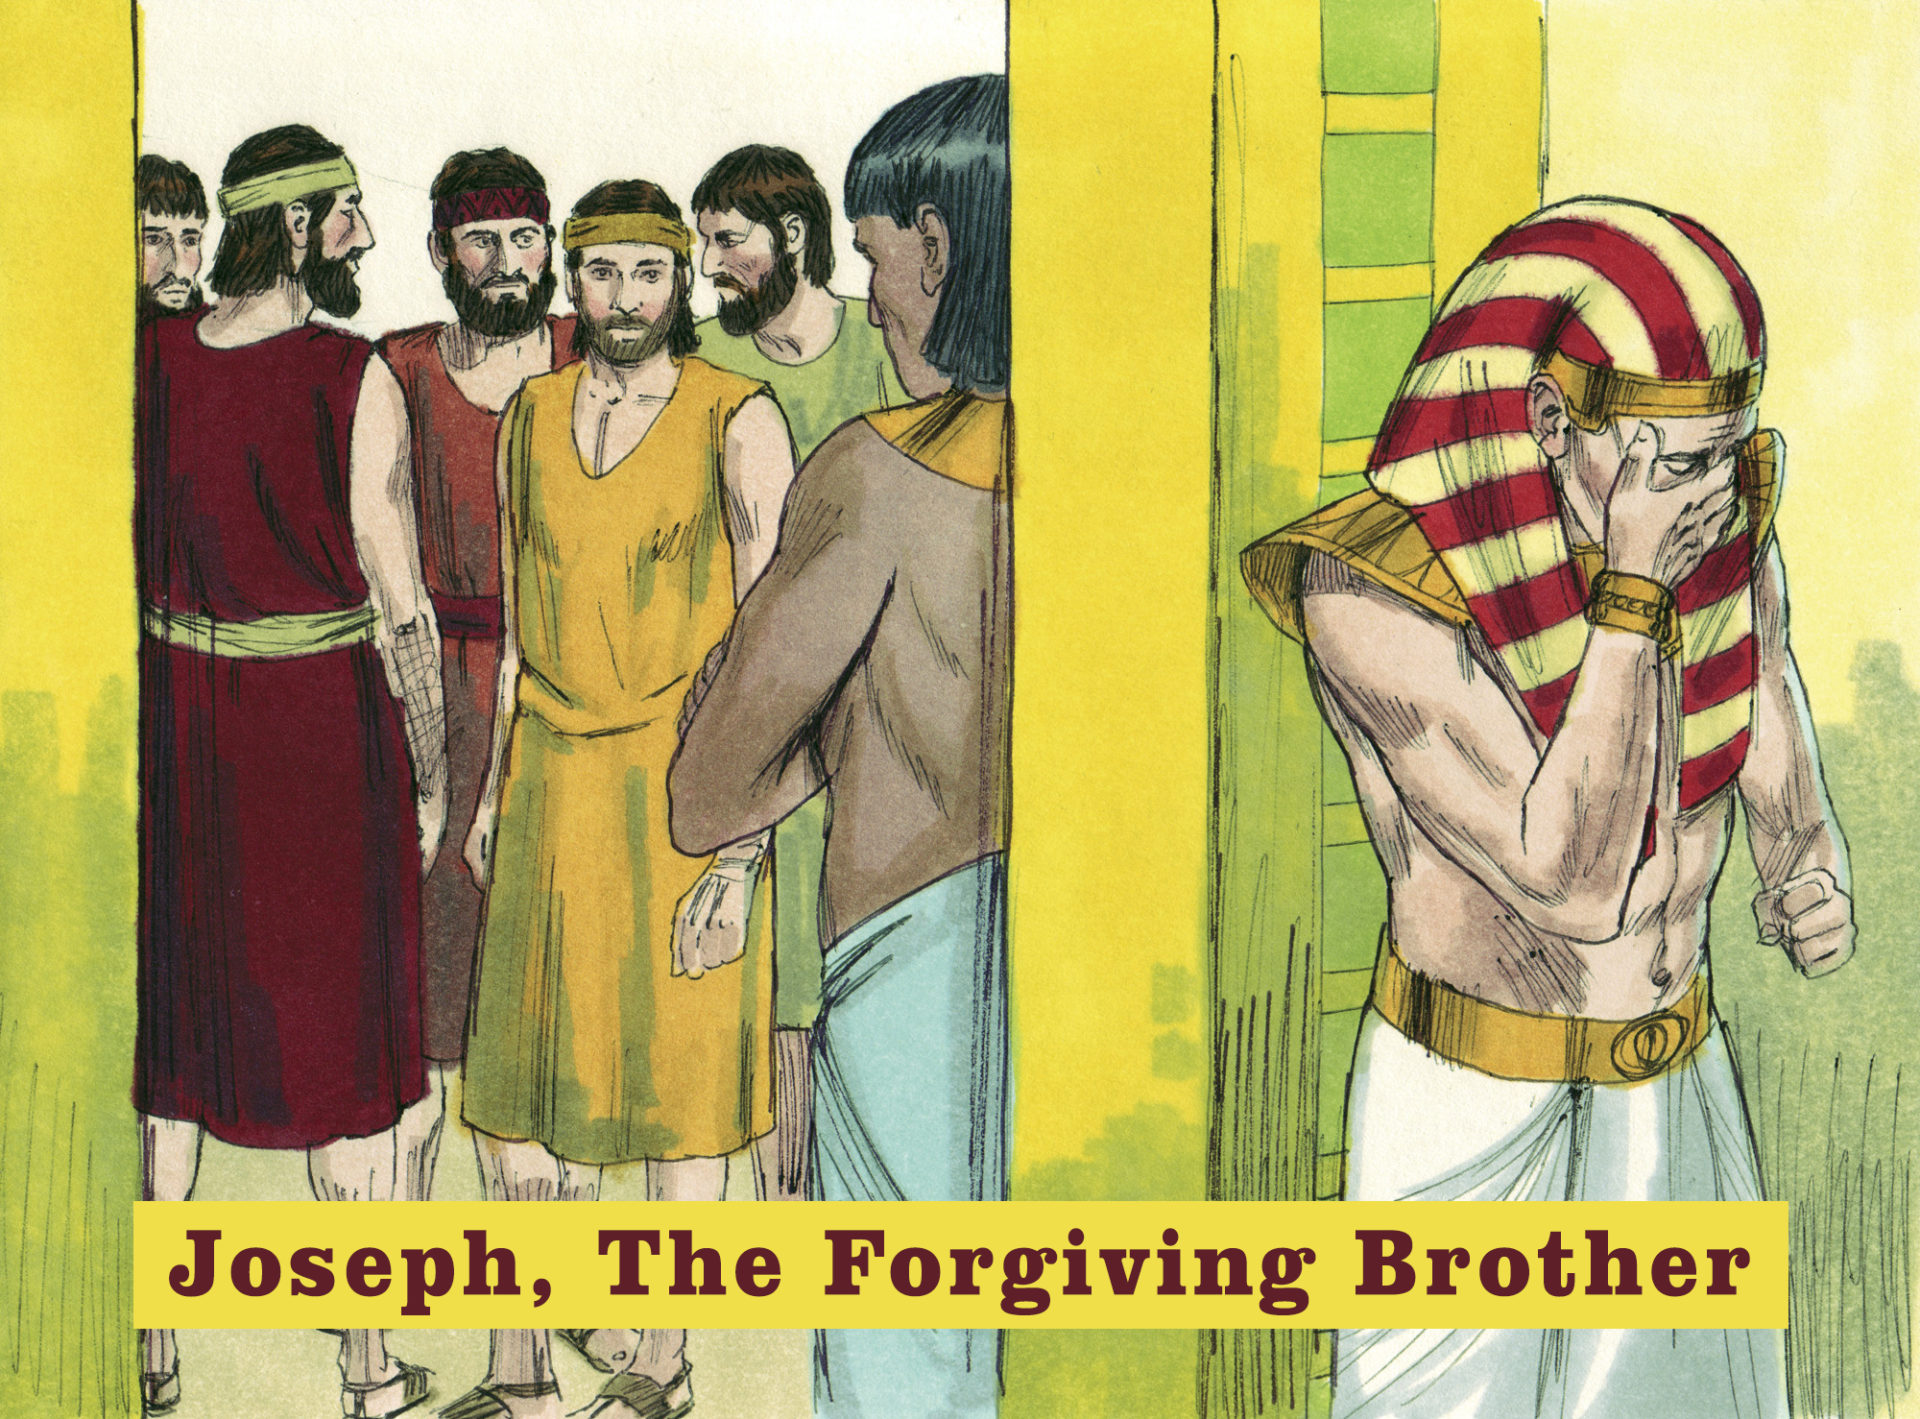 Joseph, The Forgiving Brother